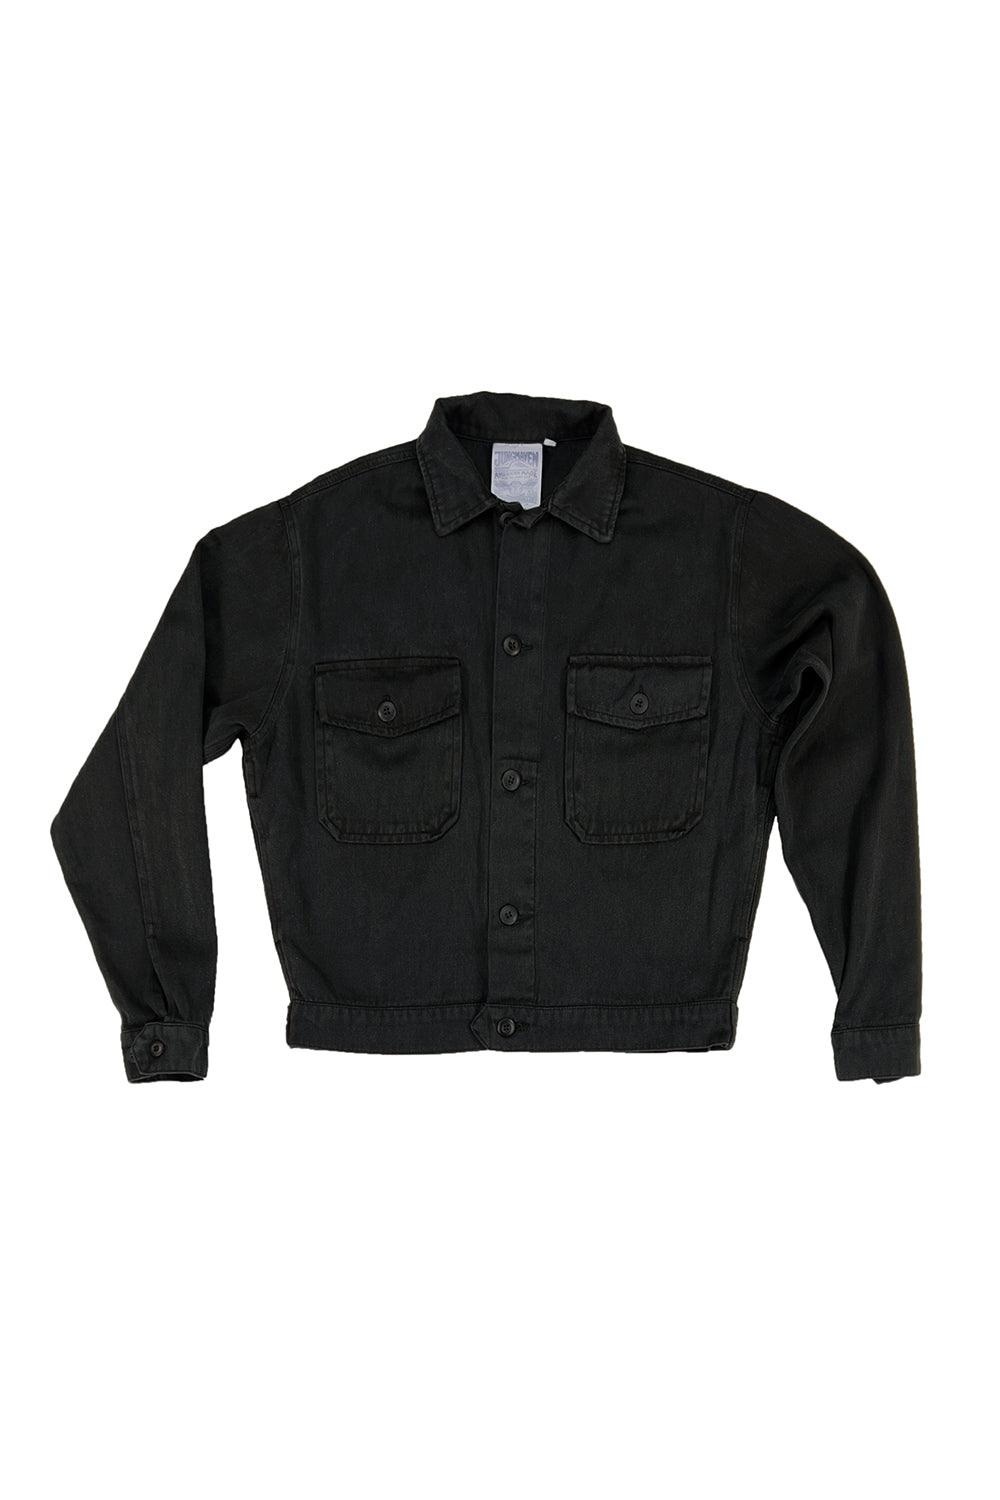 Mechanic Jacket | Jungmaven Hemp Clothing & Accessories